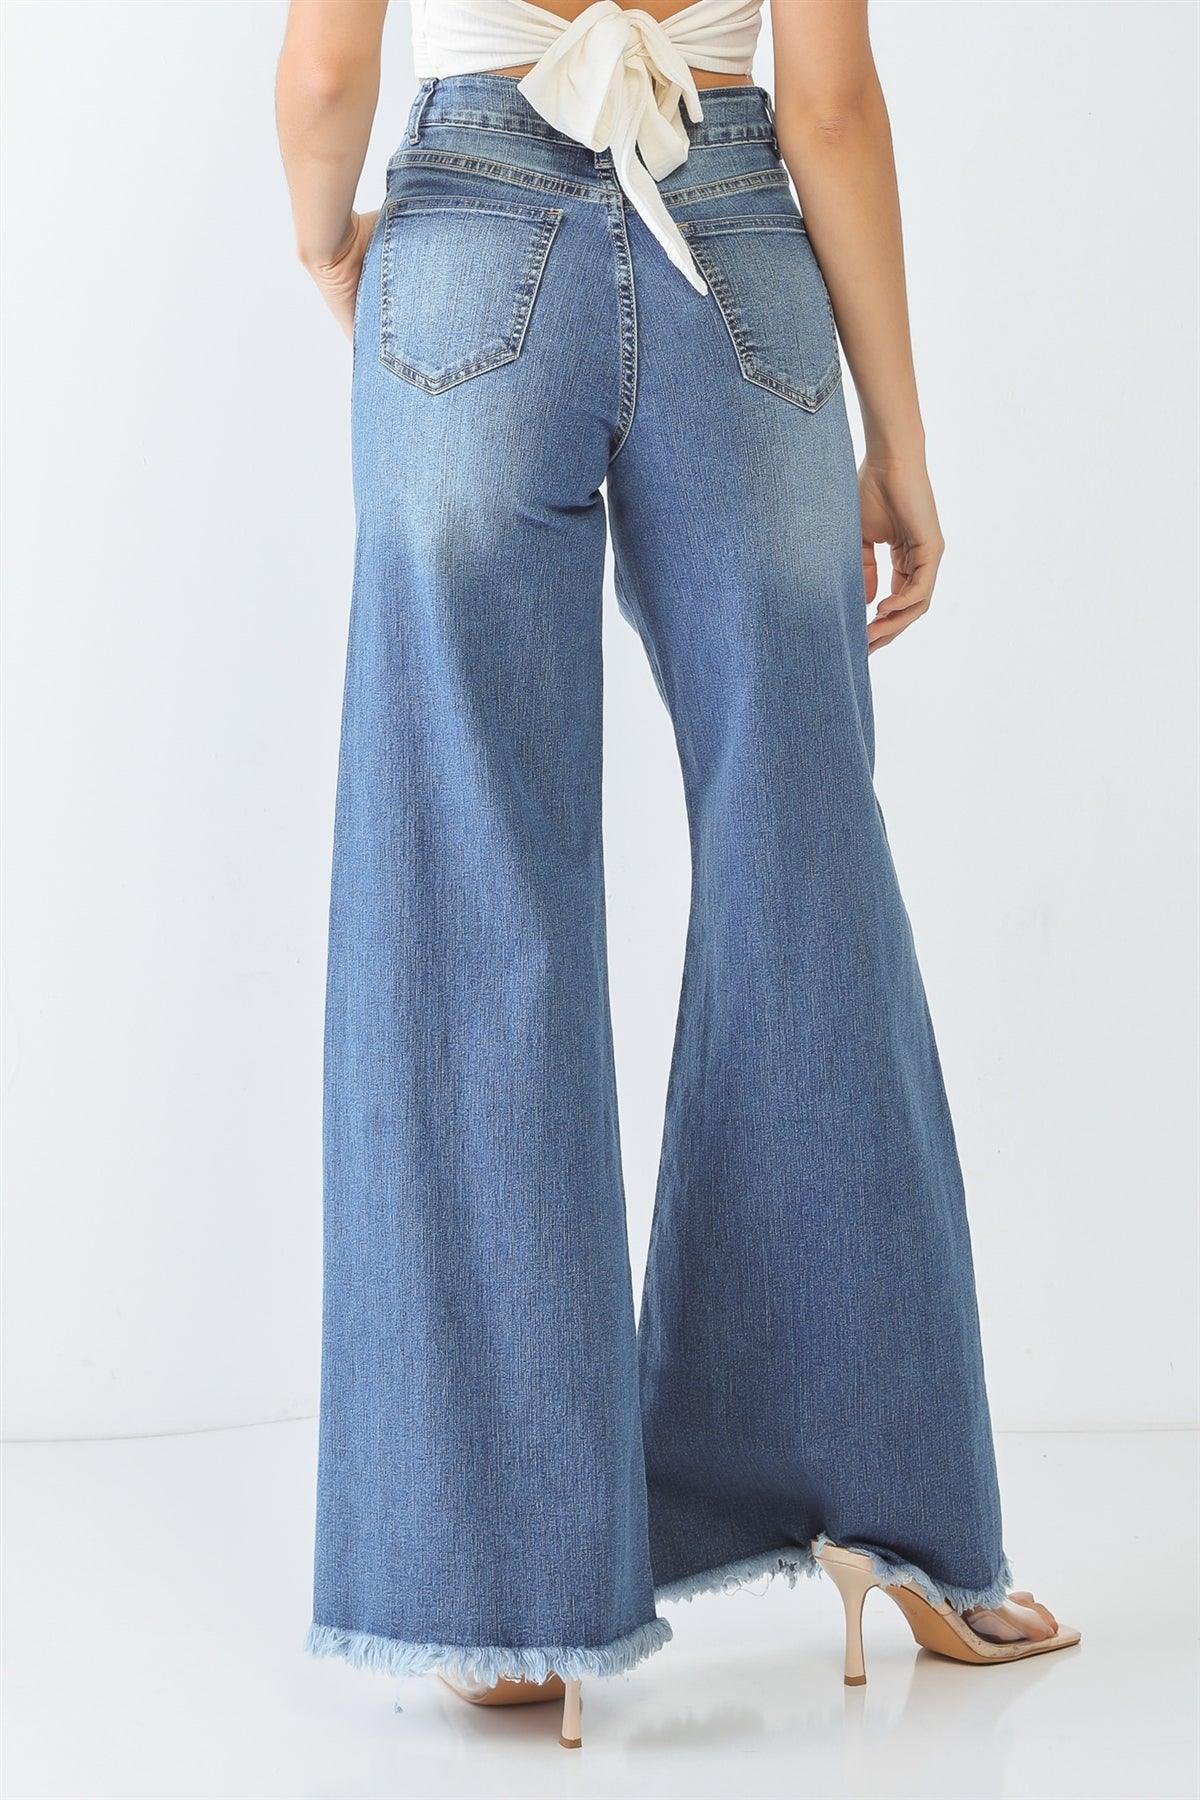 Denim Cotton Cut-Out Five Pocket High Waist Flare Jeans /4-3-2-1